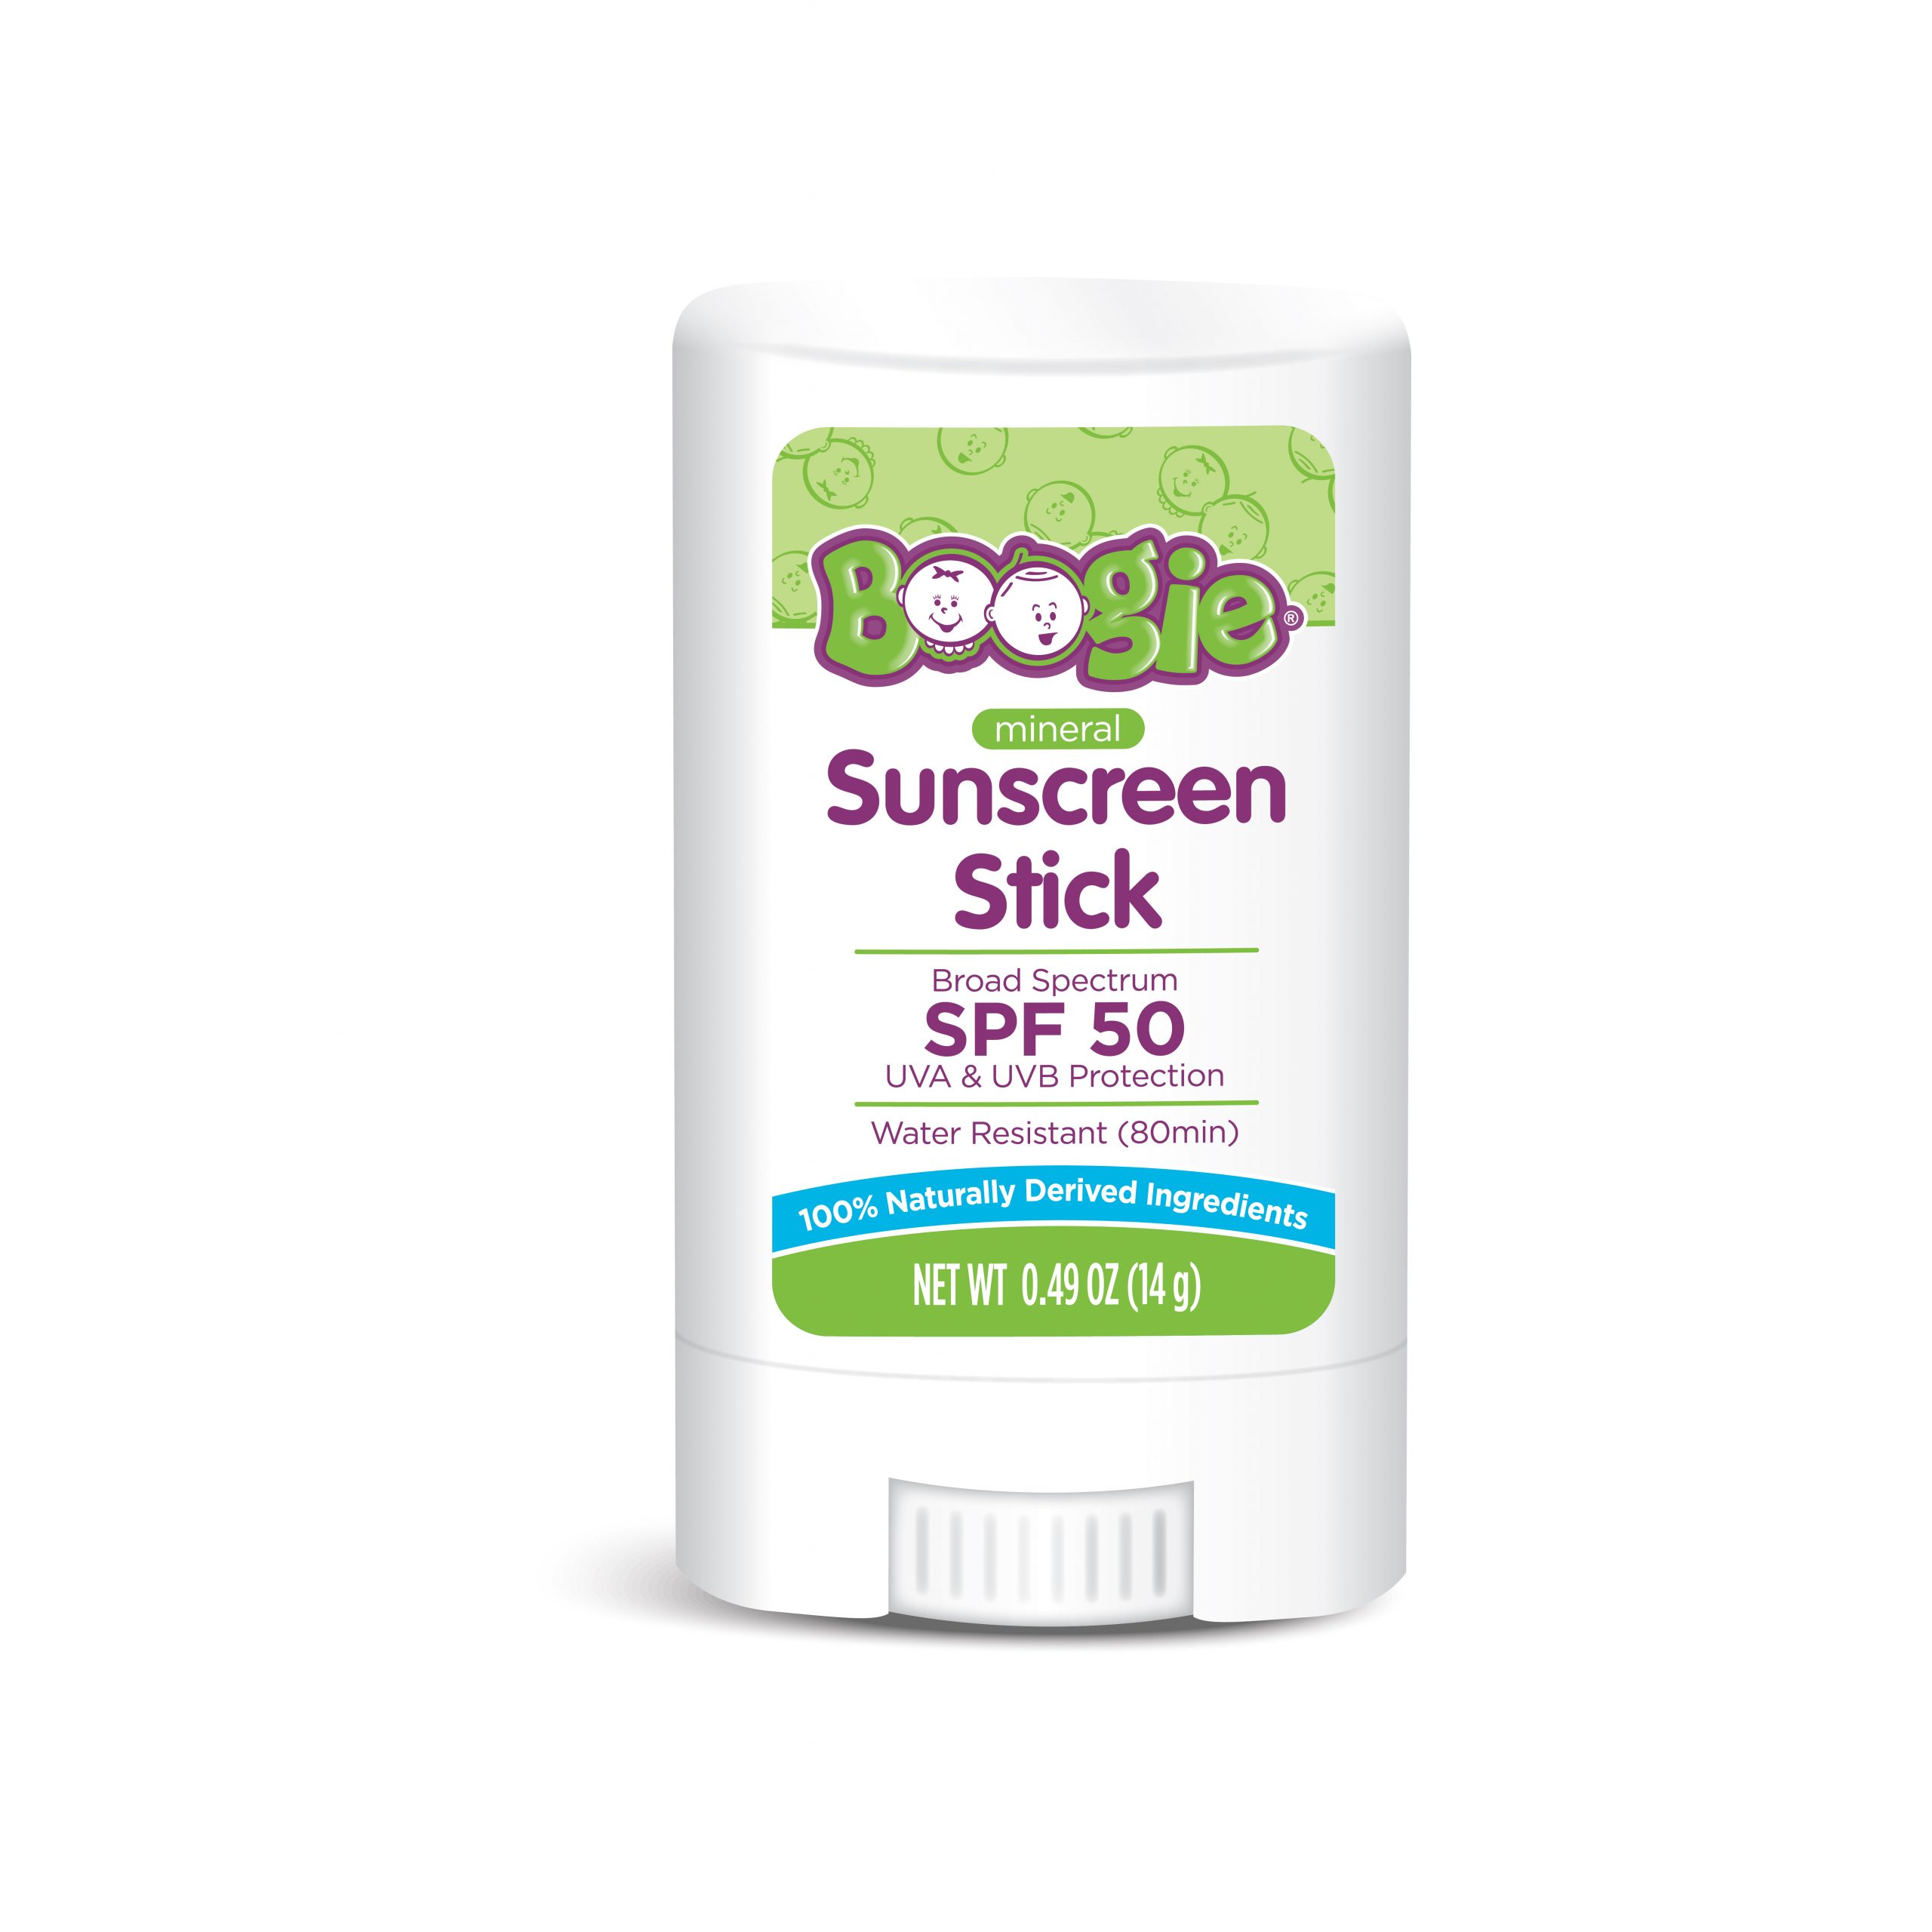 SPF 50 Sunscreen Stick - Broad spectrum SPF 50 sunscreen with